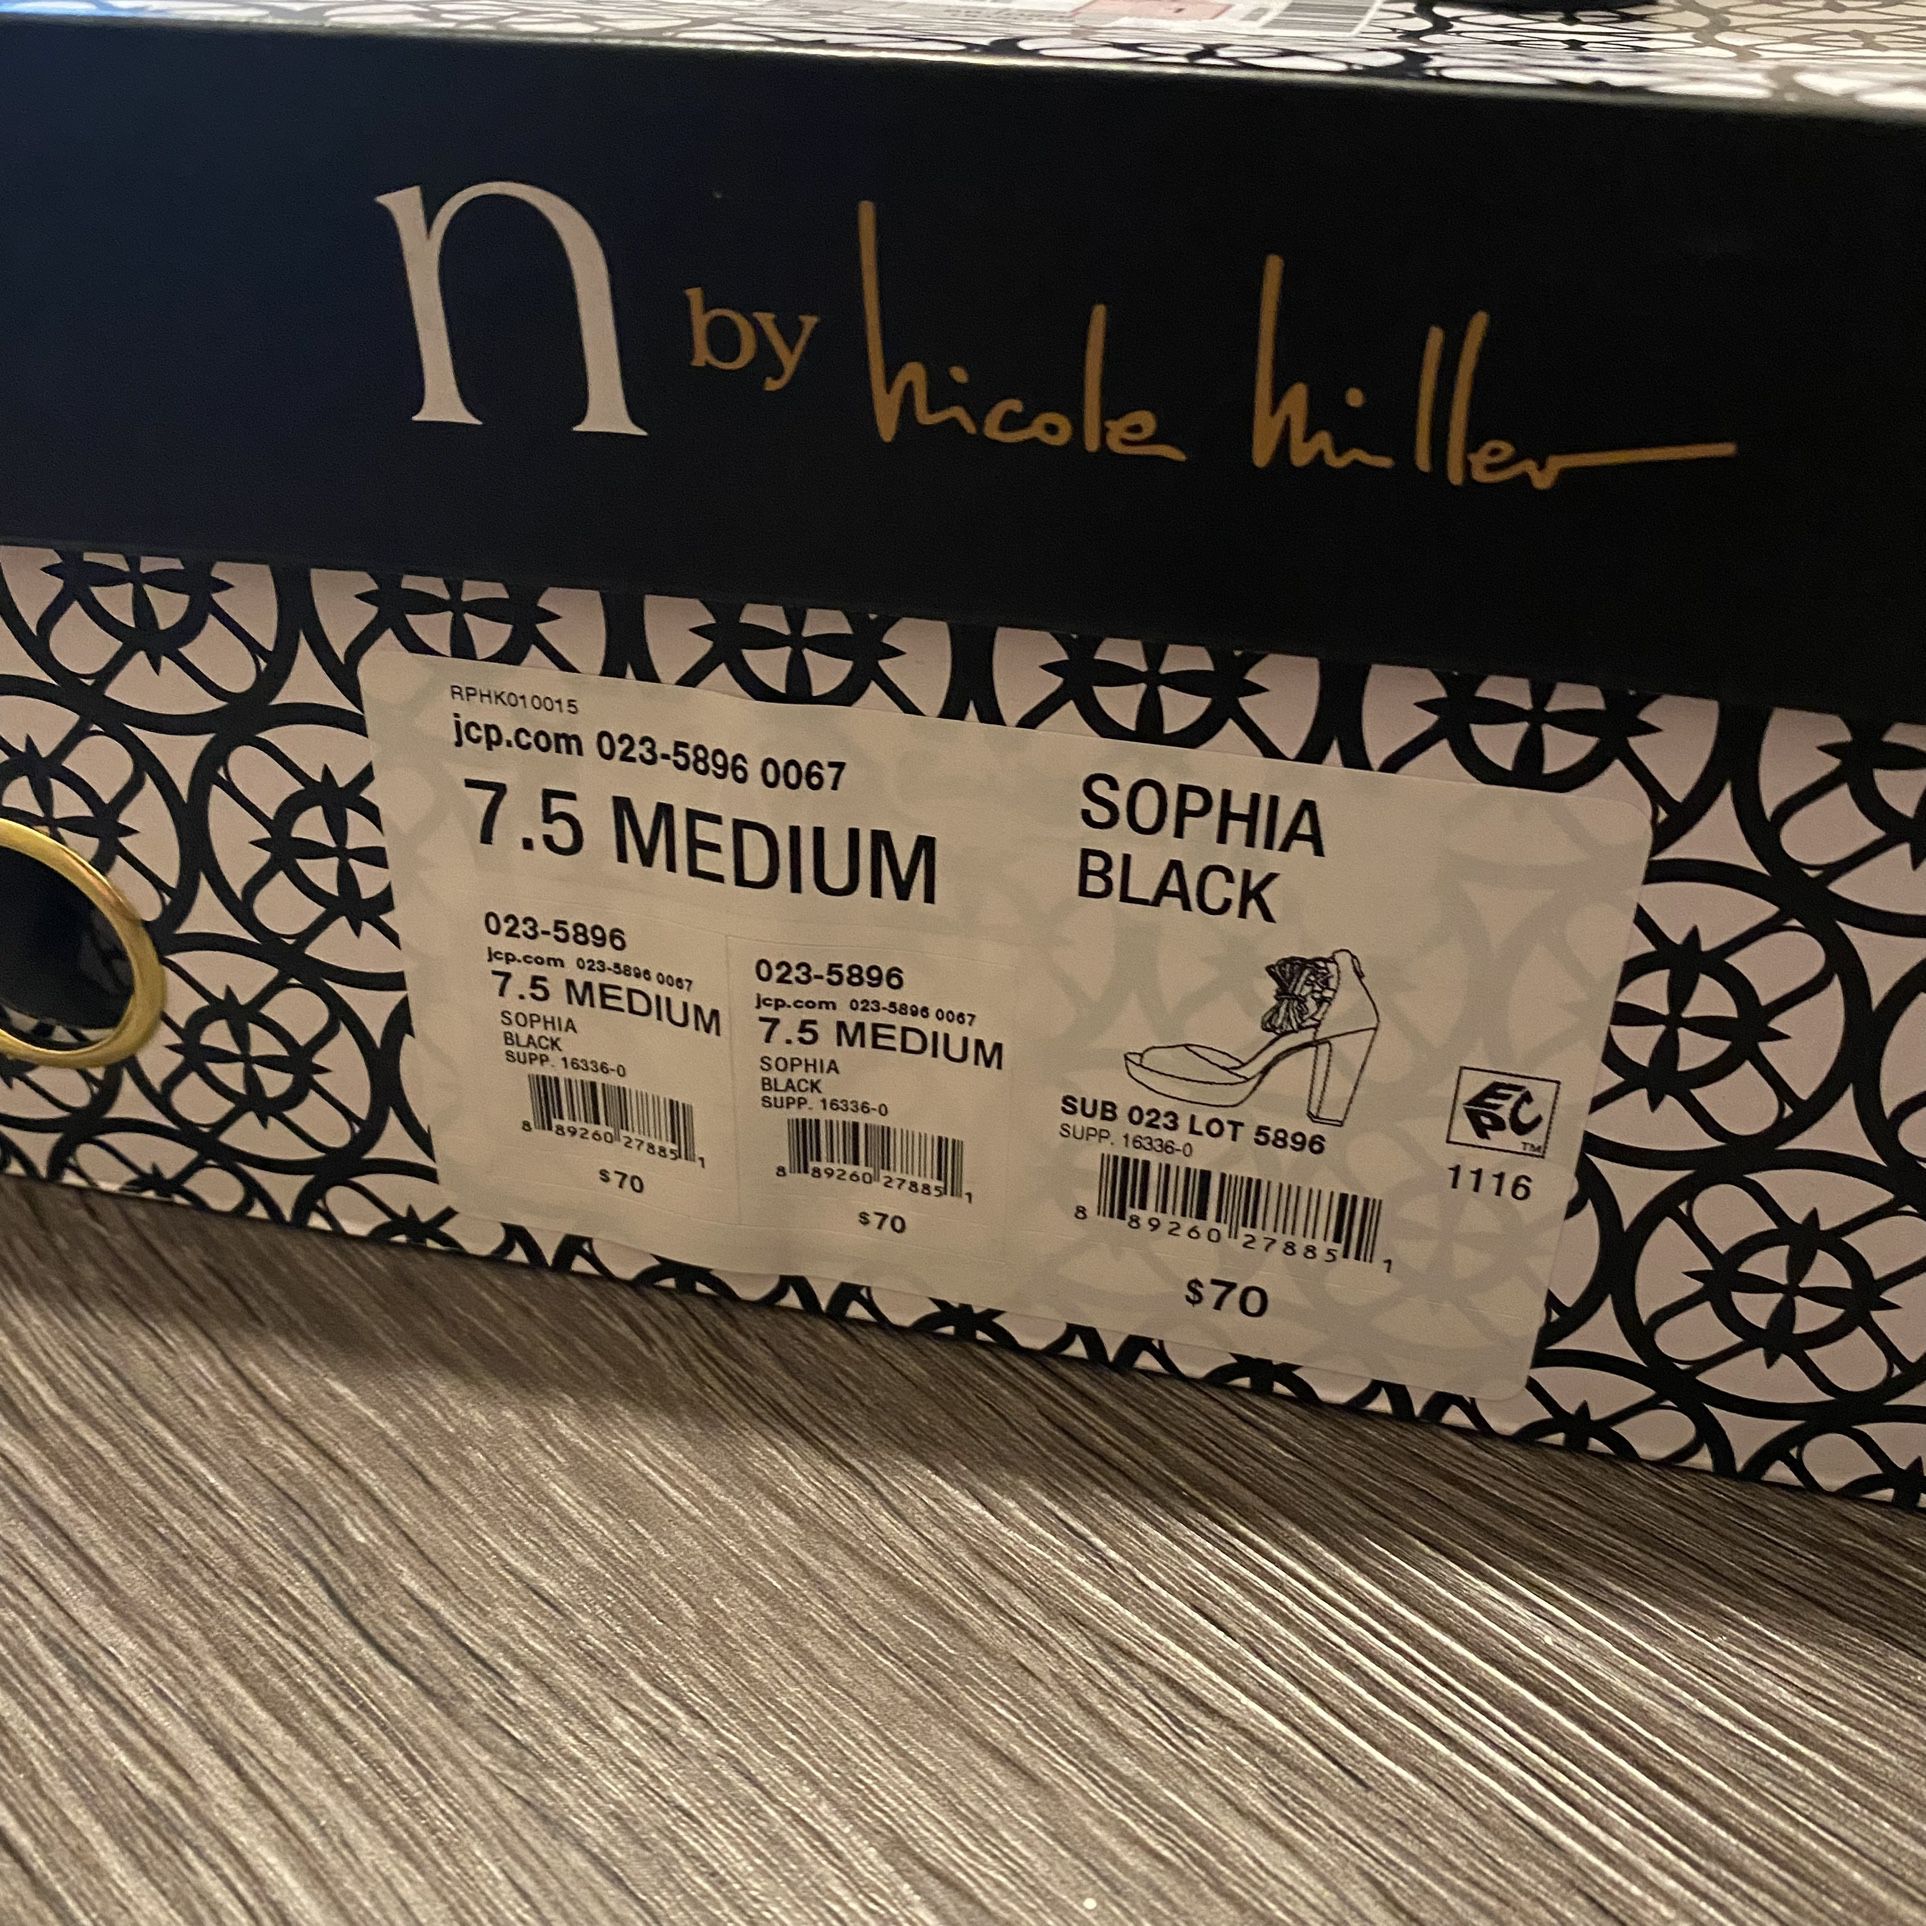 New Nicole Miller Lace Up Platform Heel Sandals Shoes Size 7.5